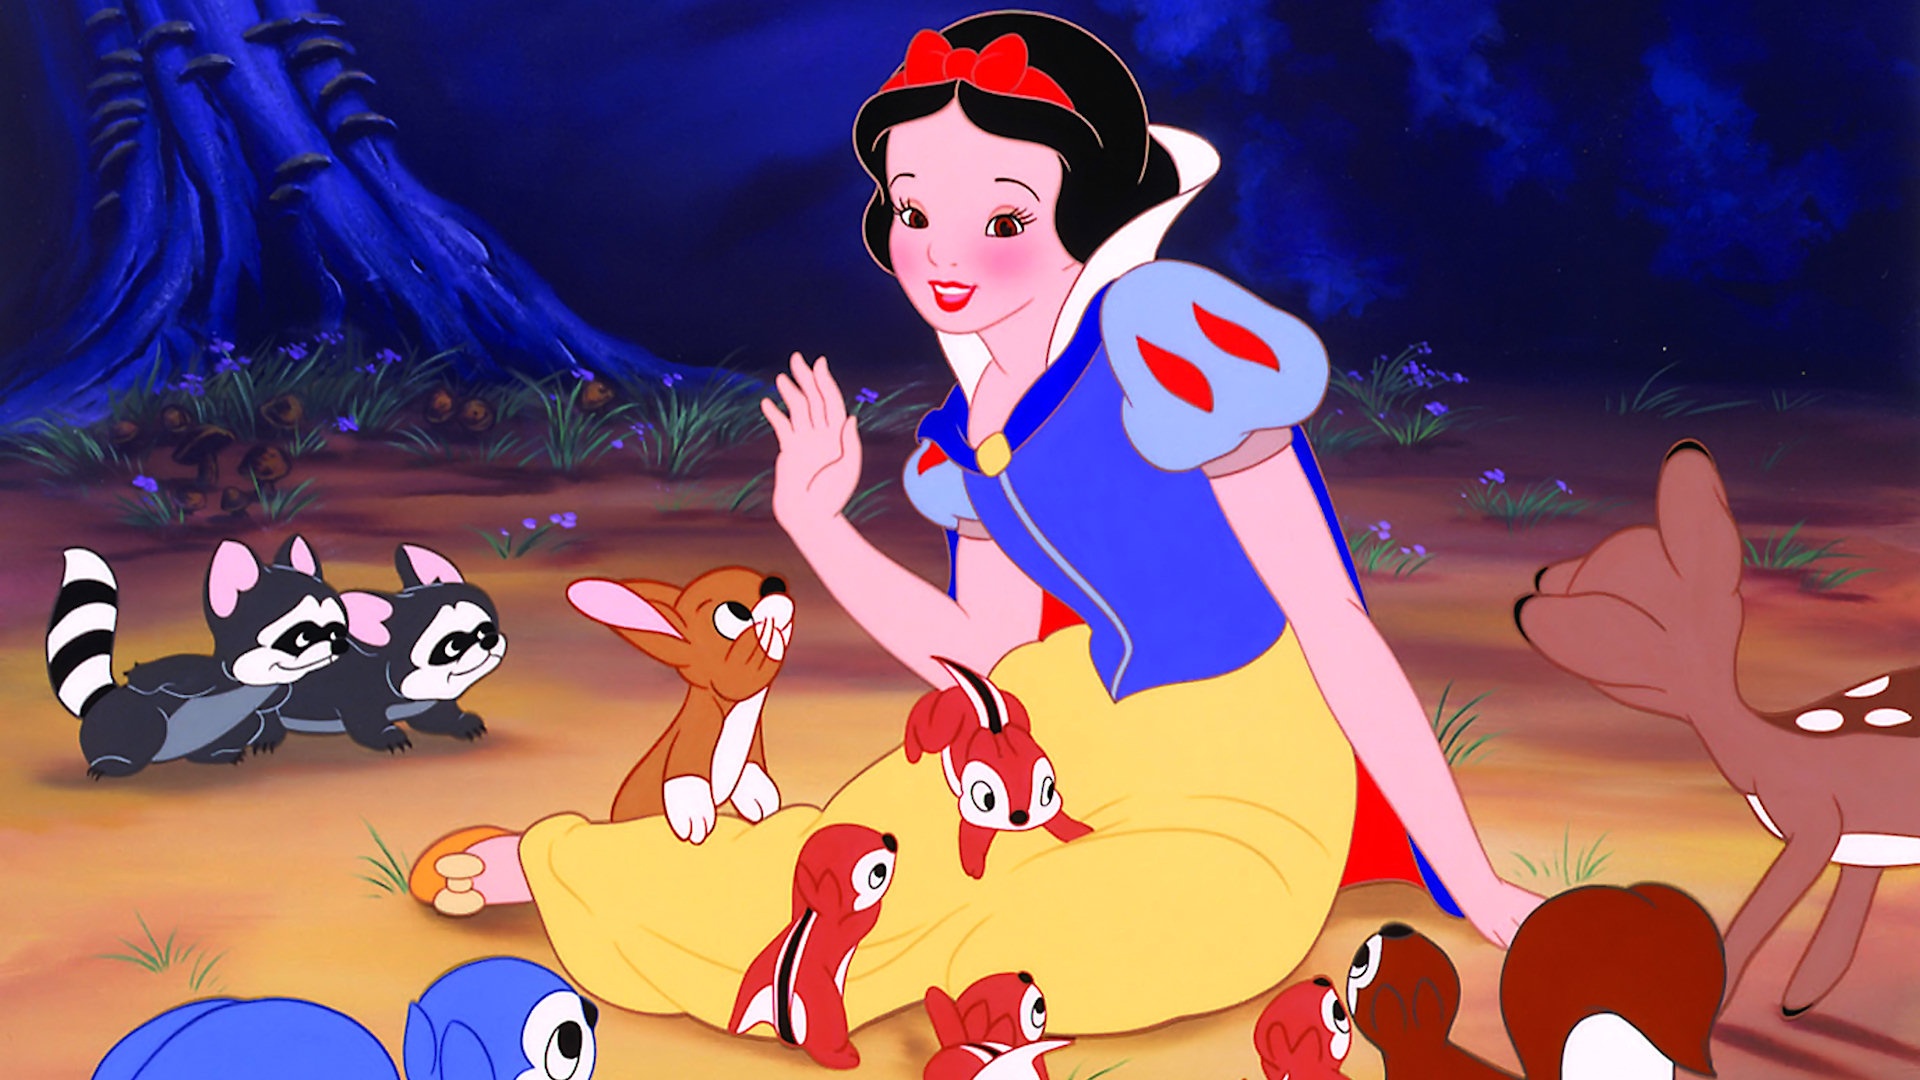 Snow White Disney Wallpaper